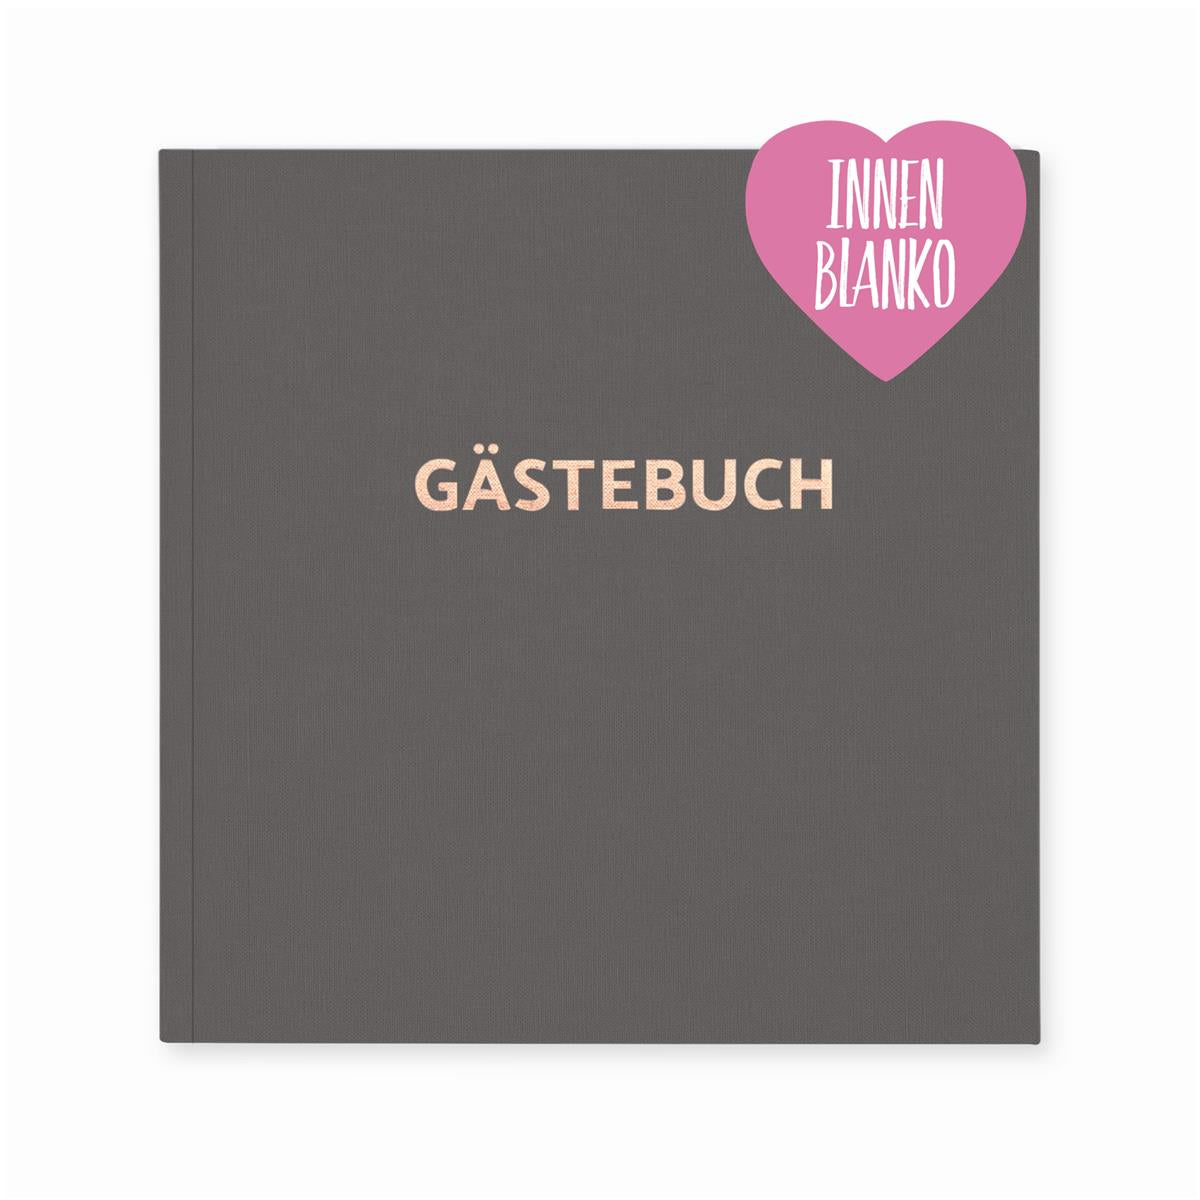 Gästebuch - Deluxe Anthrazit-Rosé (square)